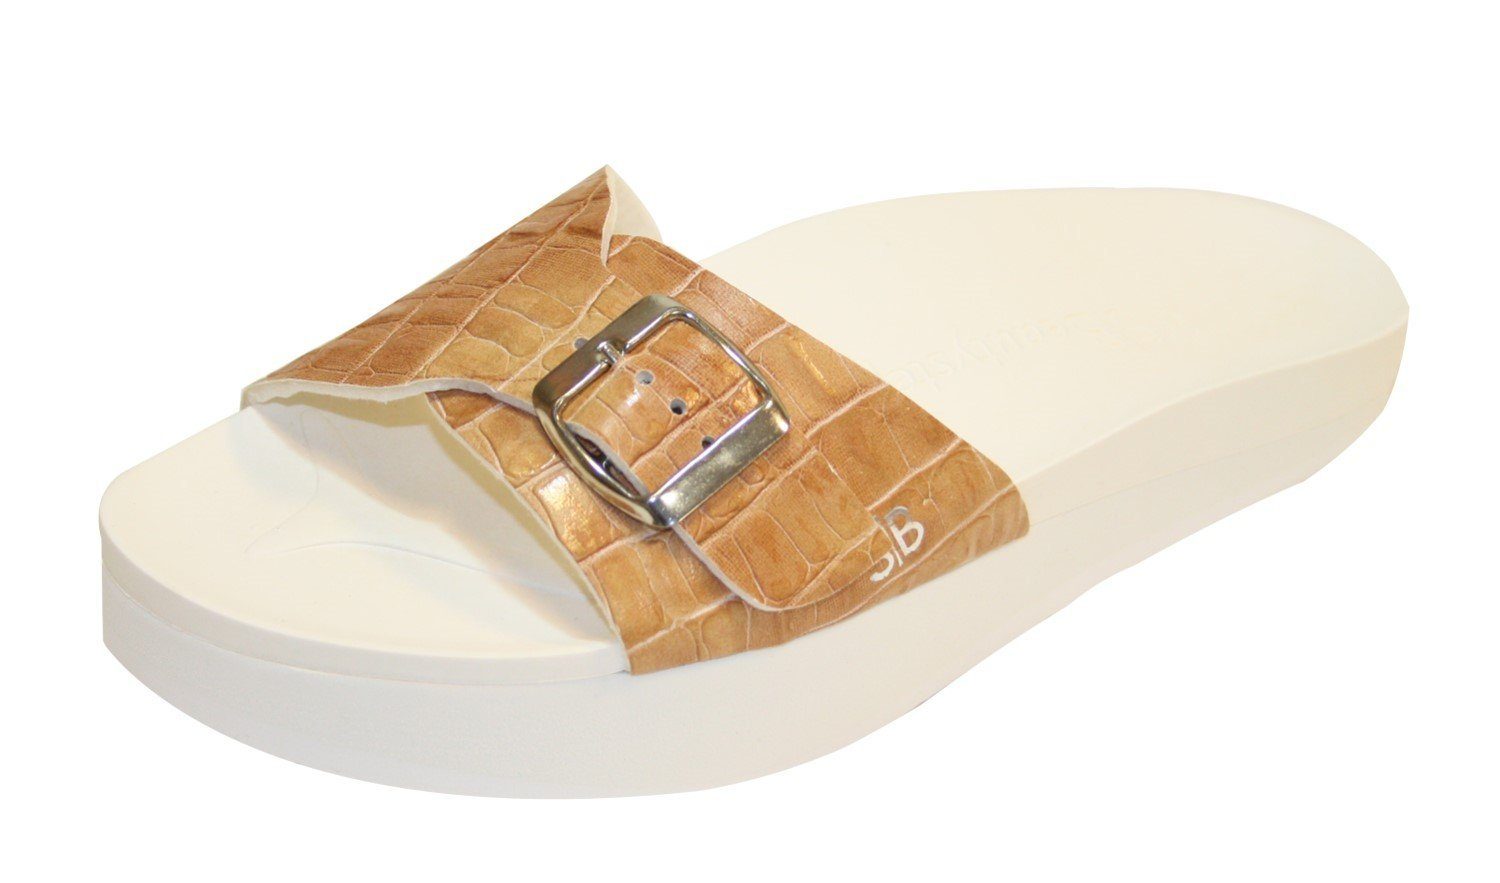 dynamic24 Pantolette Aktiv Sandalen Schuhe Slipper Anti Cellulite Fußbett  Kroko Optik braun online kaufen | OTTO